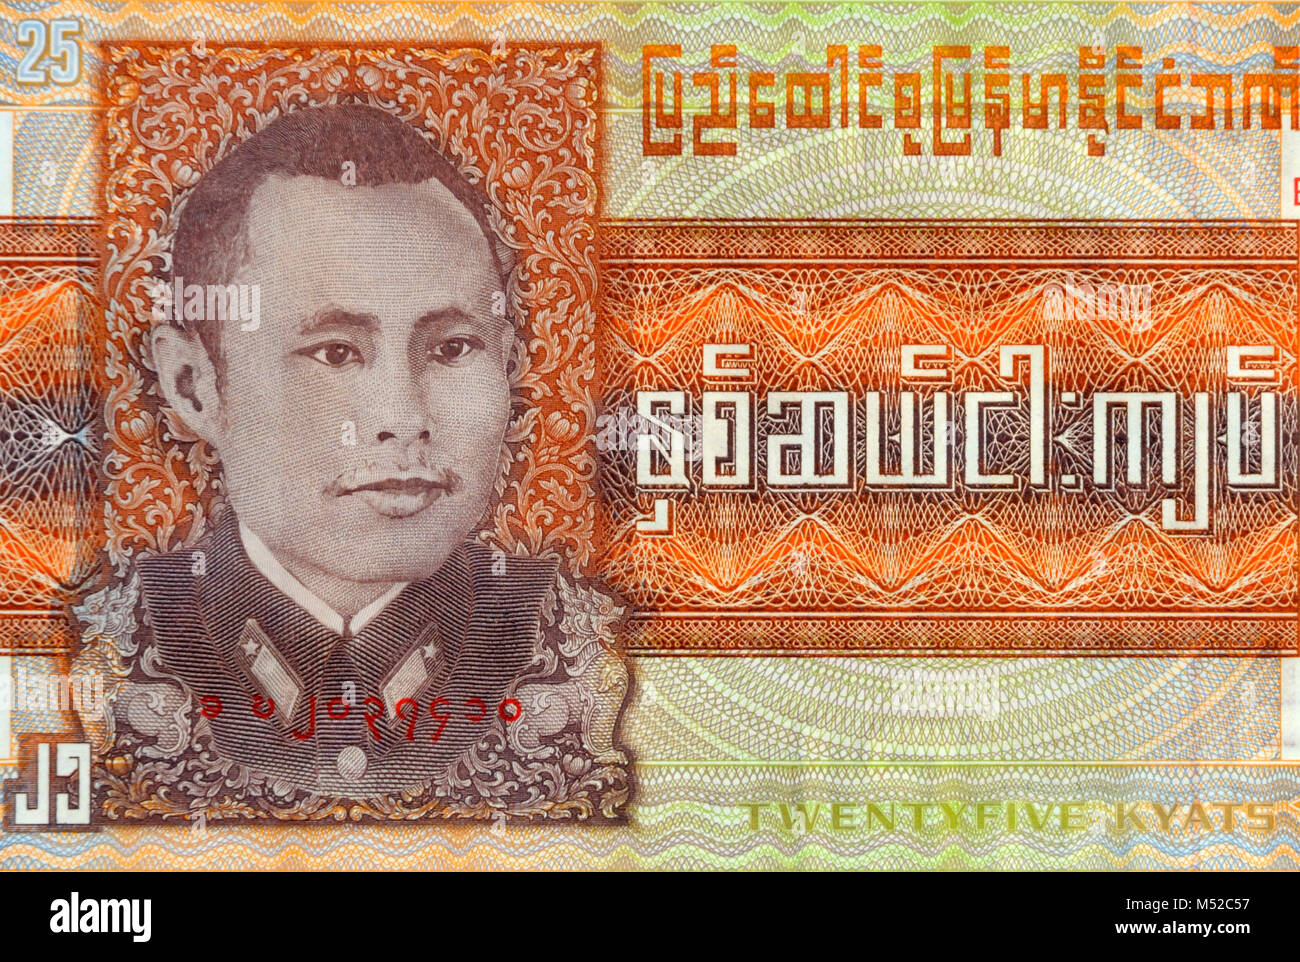 Burma 25 Kyat Banknote Stockfoto